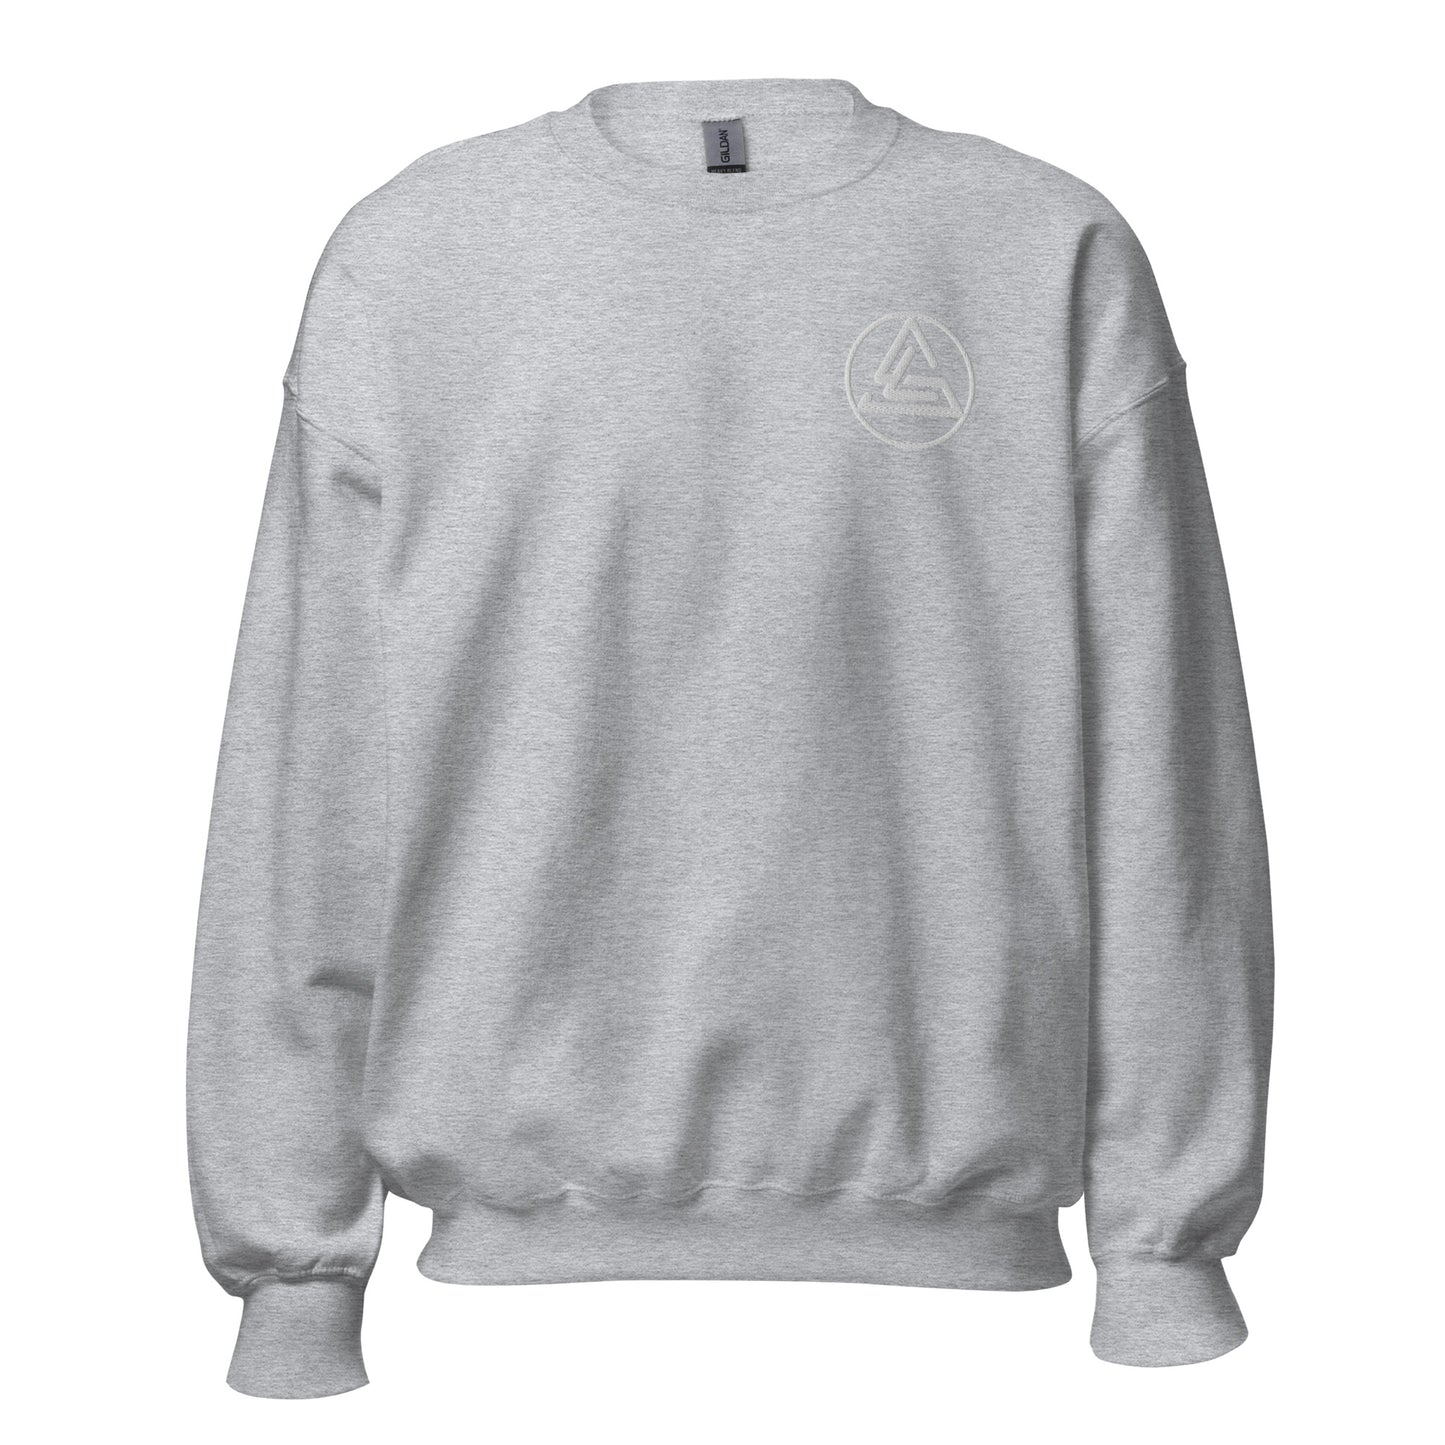 SLands Embroidered Sweatshirt